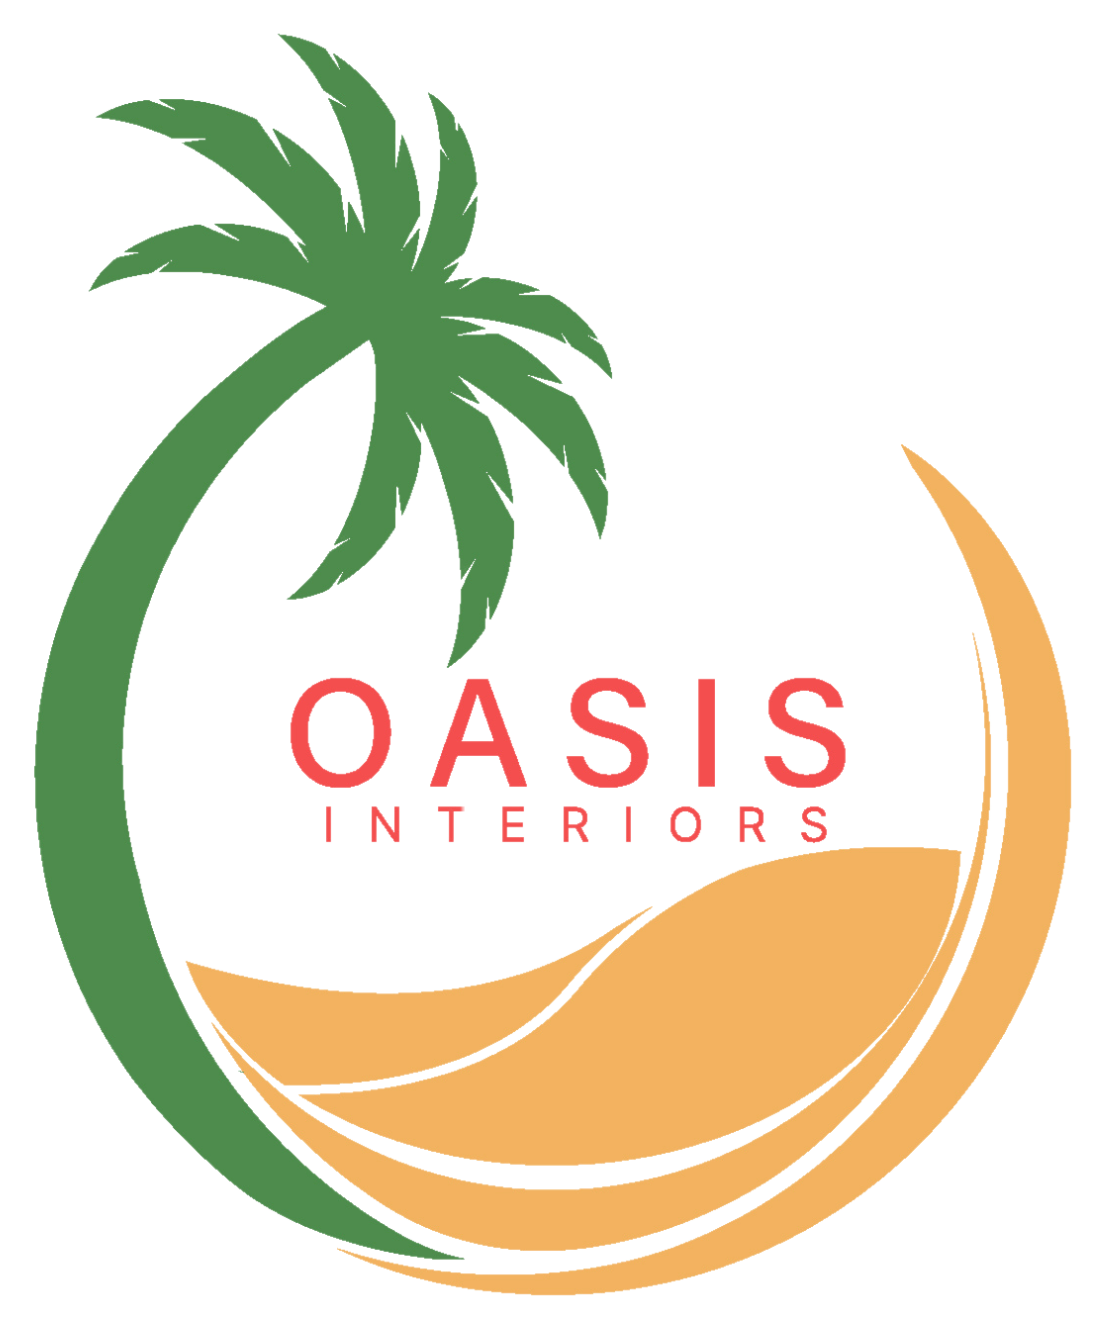 Oasis interiors